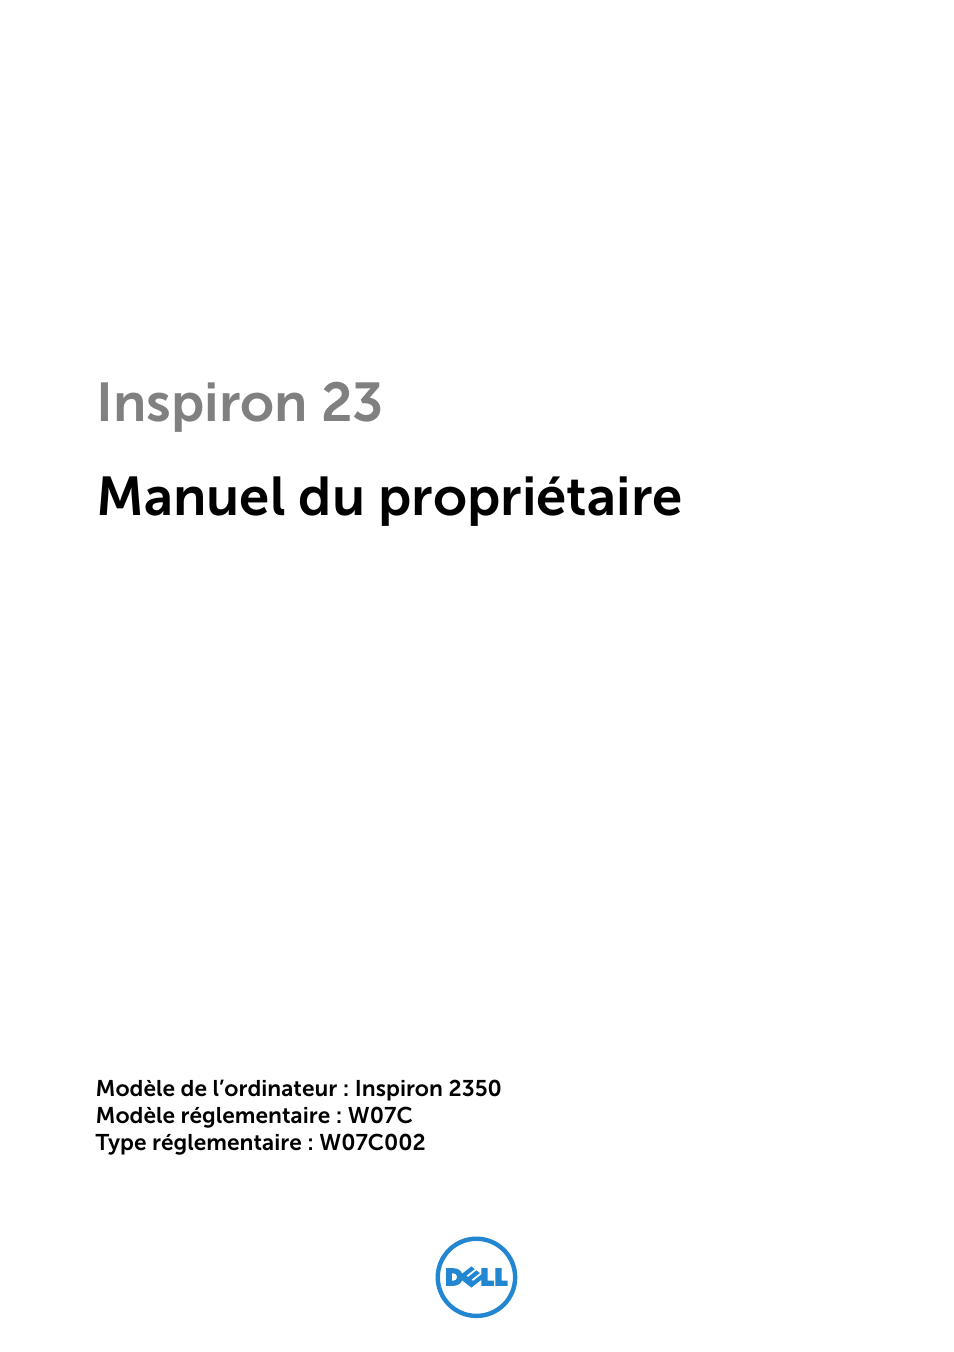 Dell Inspiron 23 (2350, Mid 2013) Manuel d'utilisation | Pages: 75